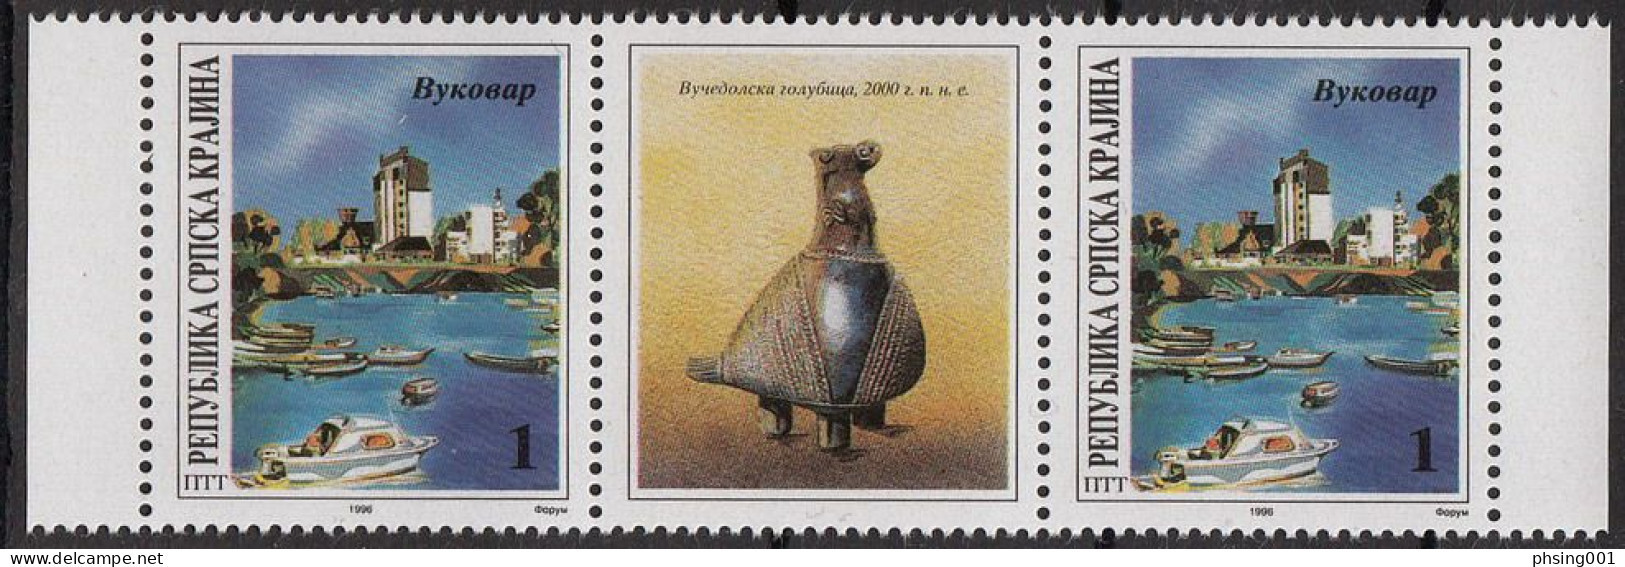 Croatia 1996 Serbian Krajina River Danube Boats, Middle Row, 2 Stamps With Label MNH - Croatie